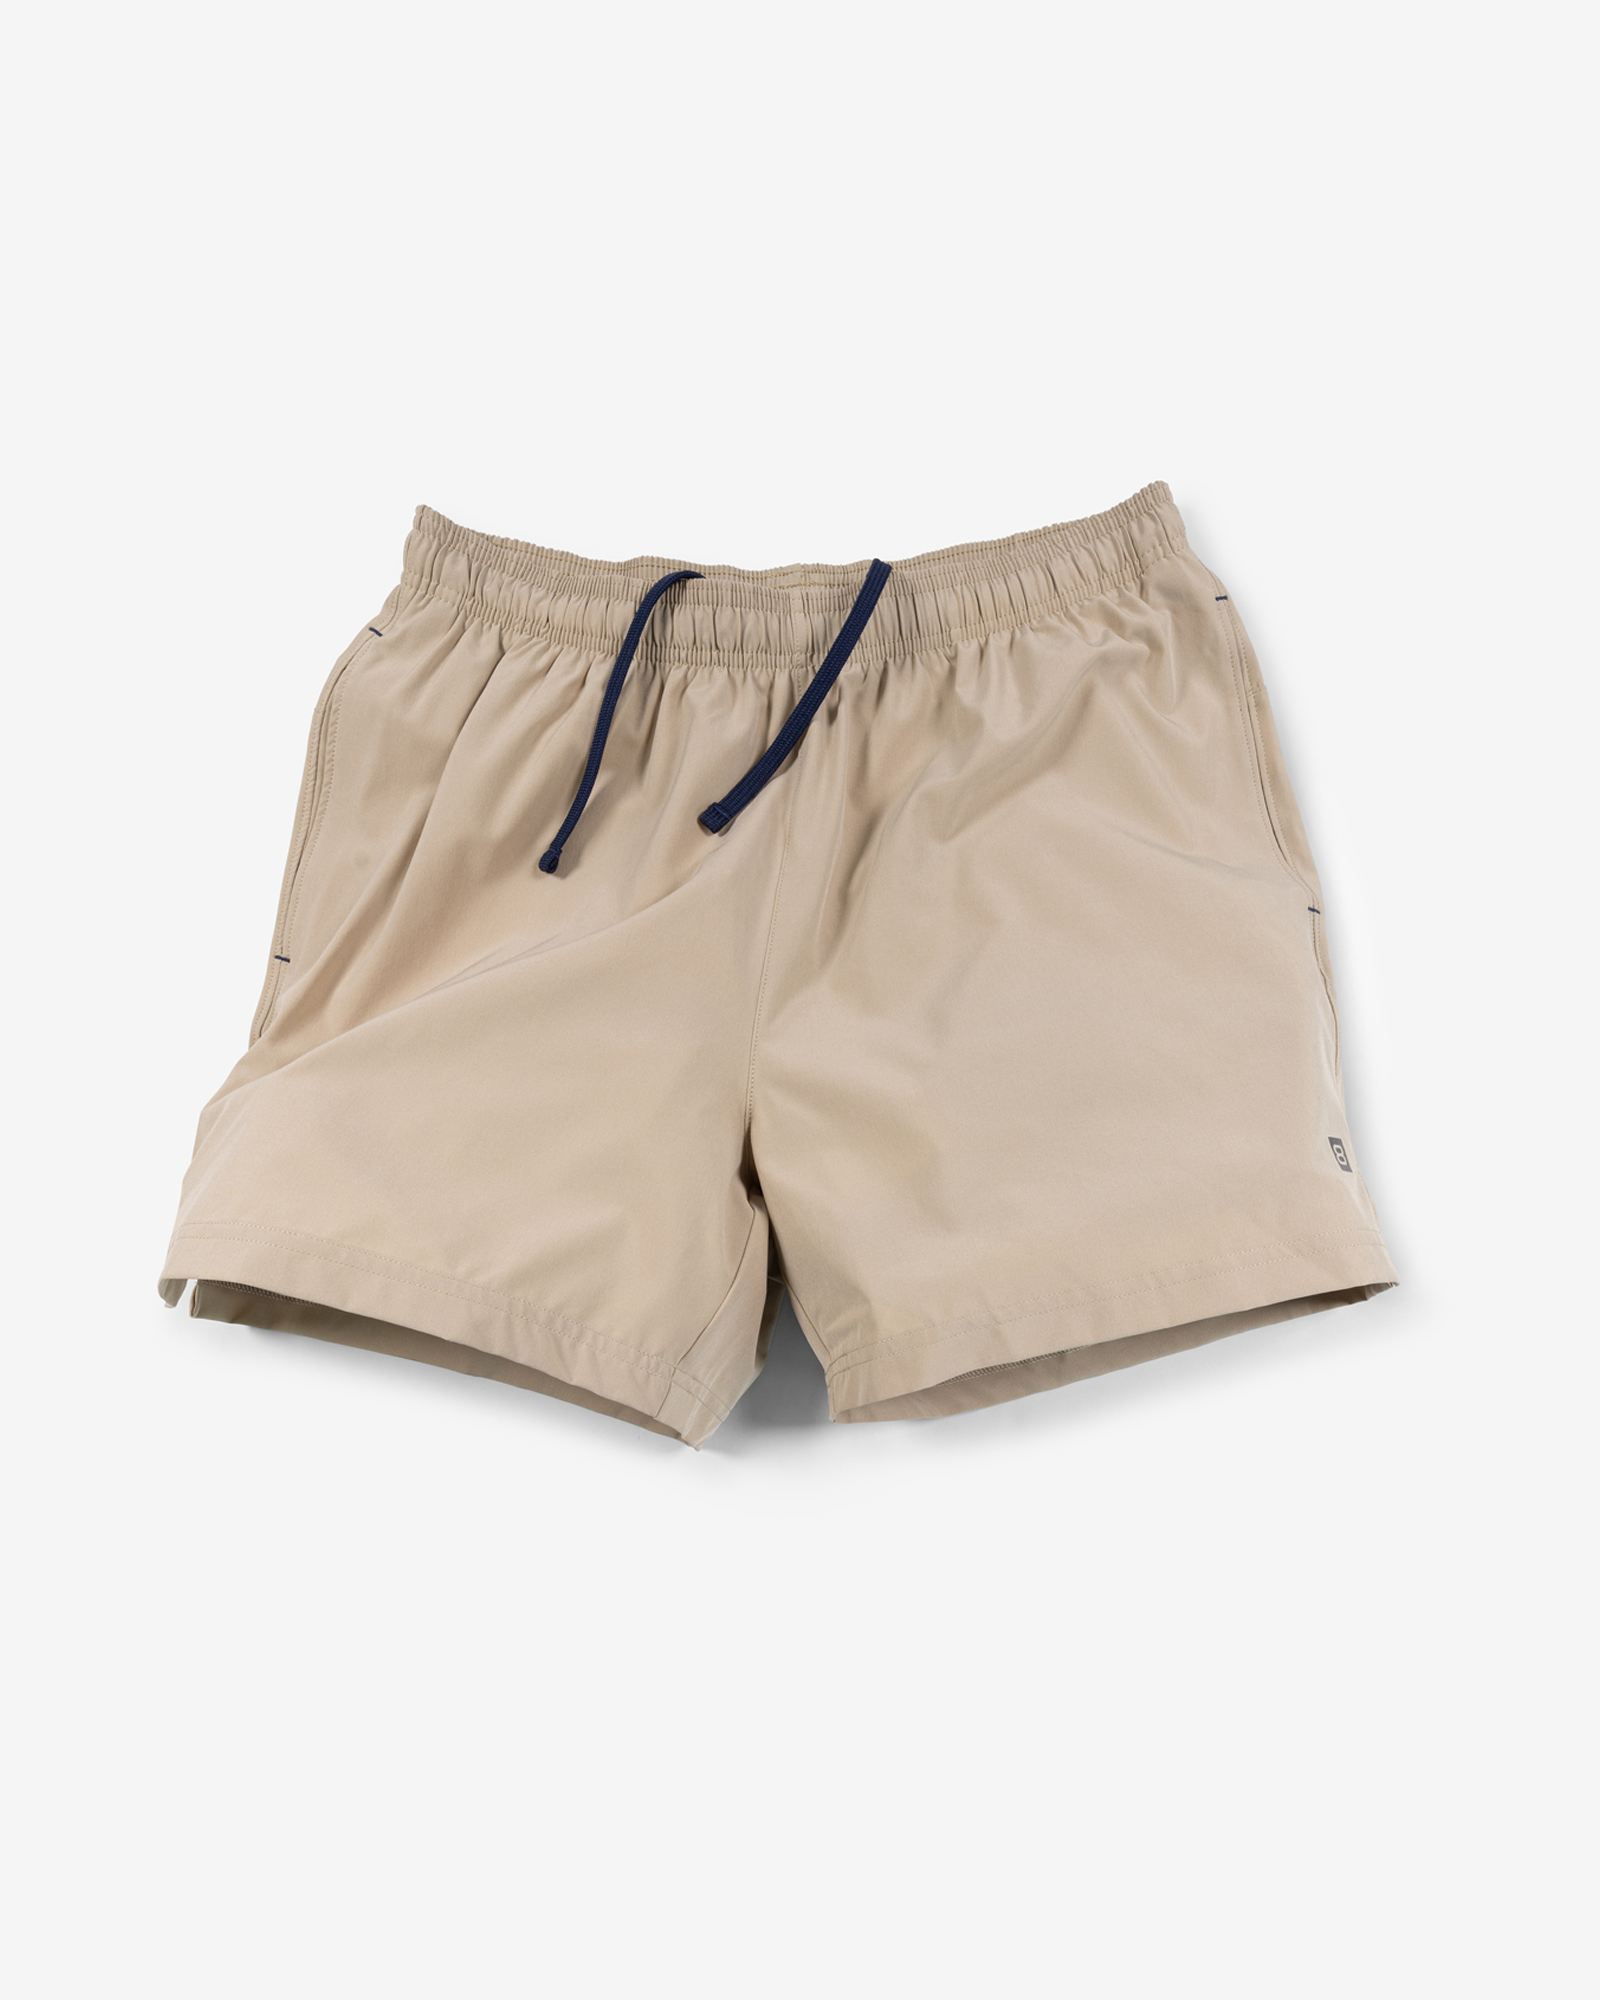 RTA Men's Clyde Combo Shorts